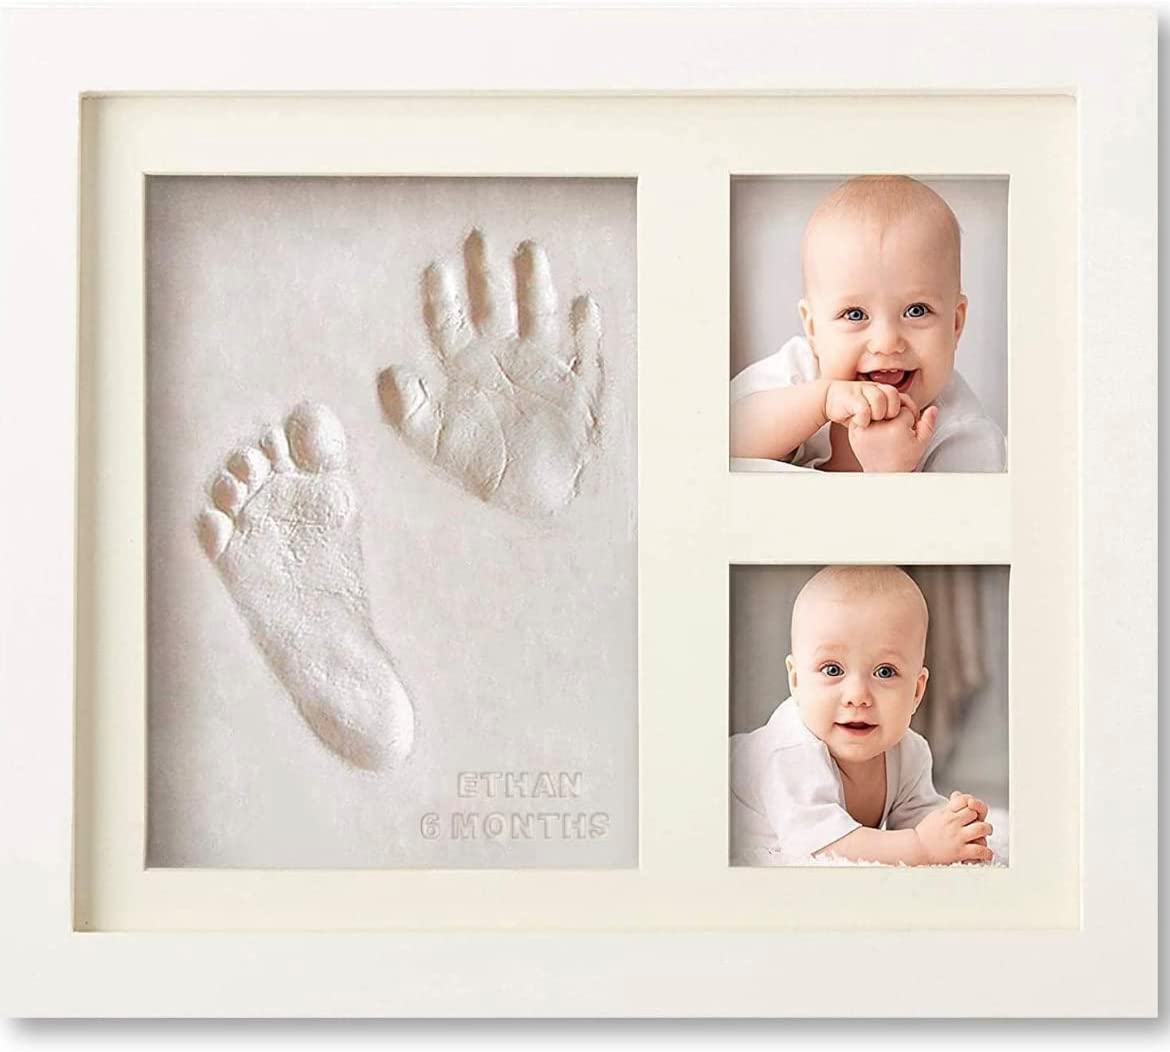  Baby Hand and Footprint Kit - Newborn Keepsake Picture